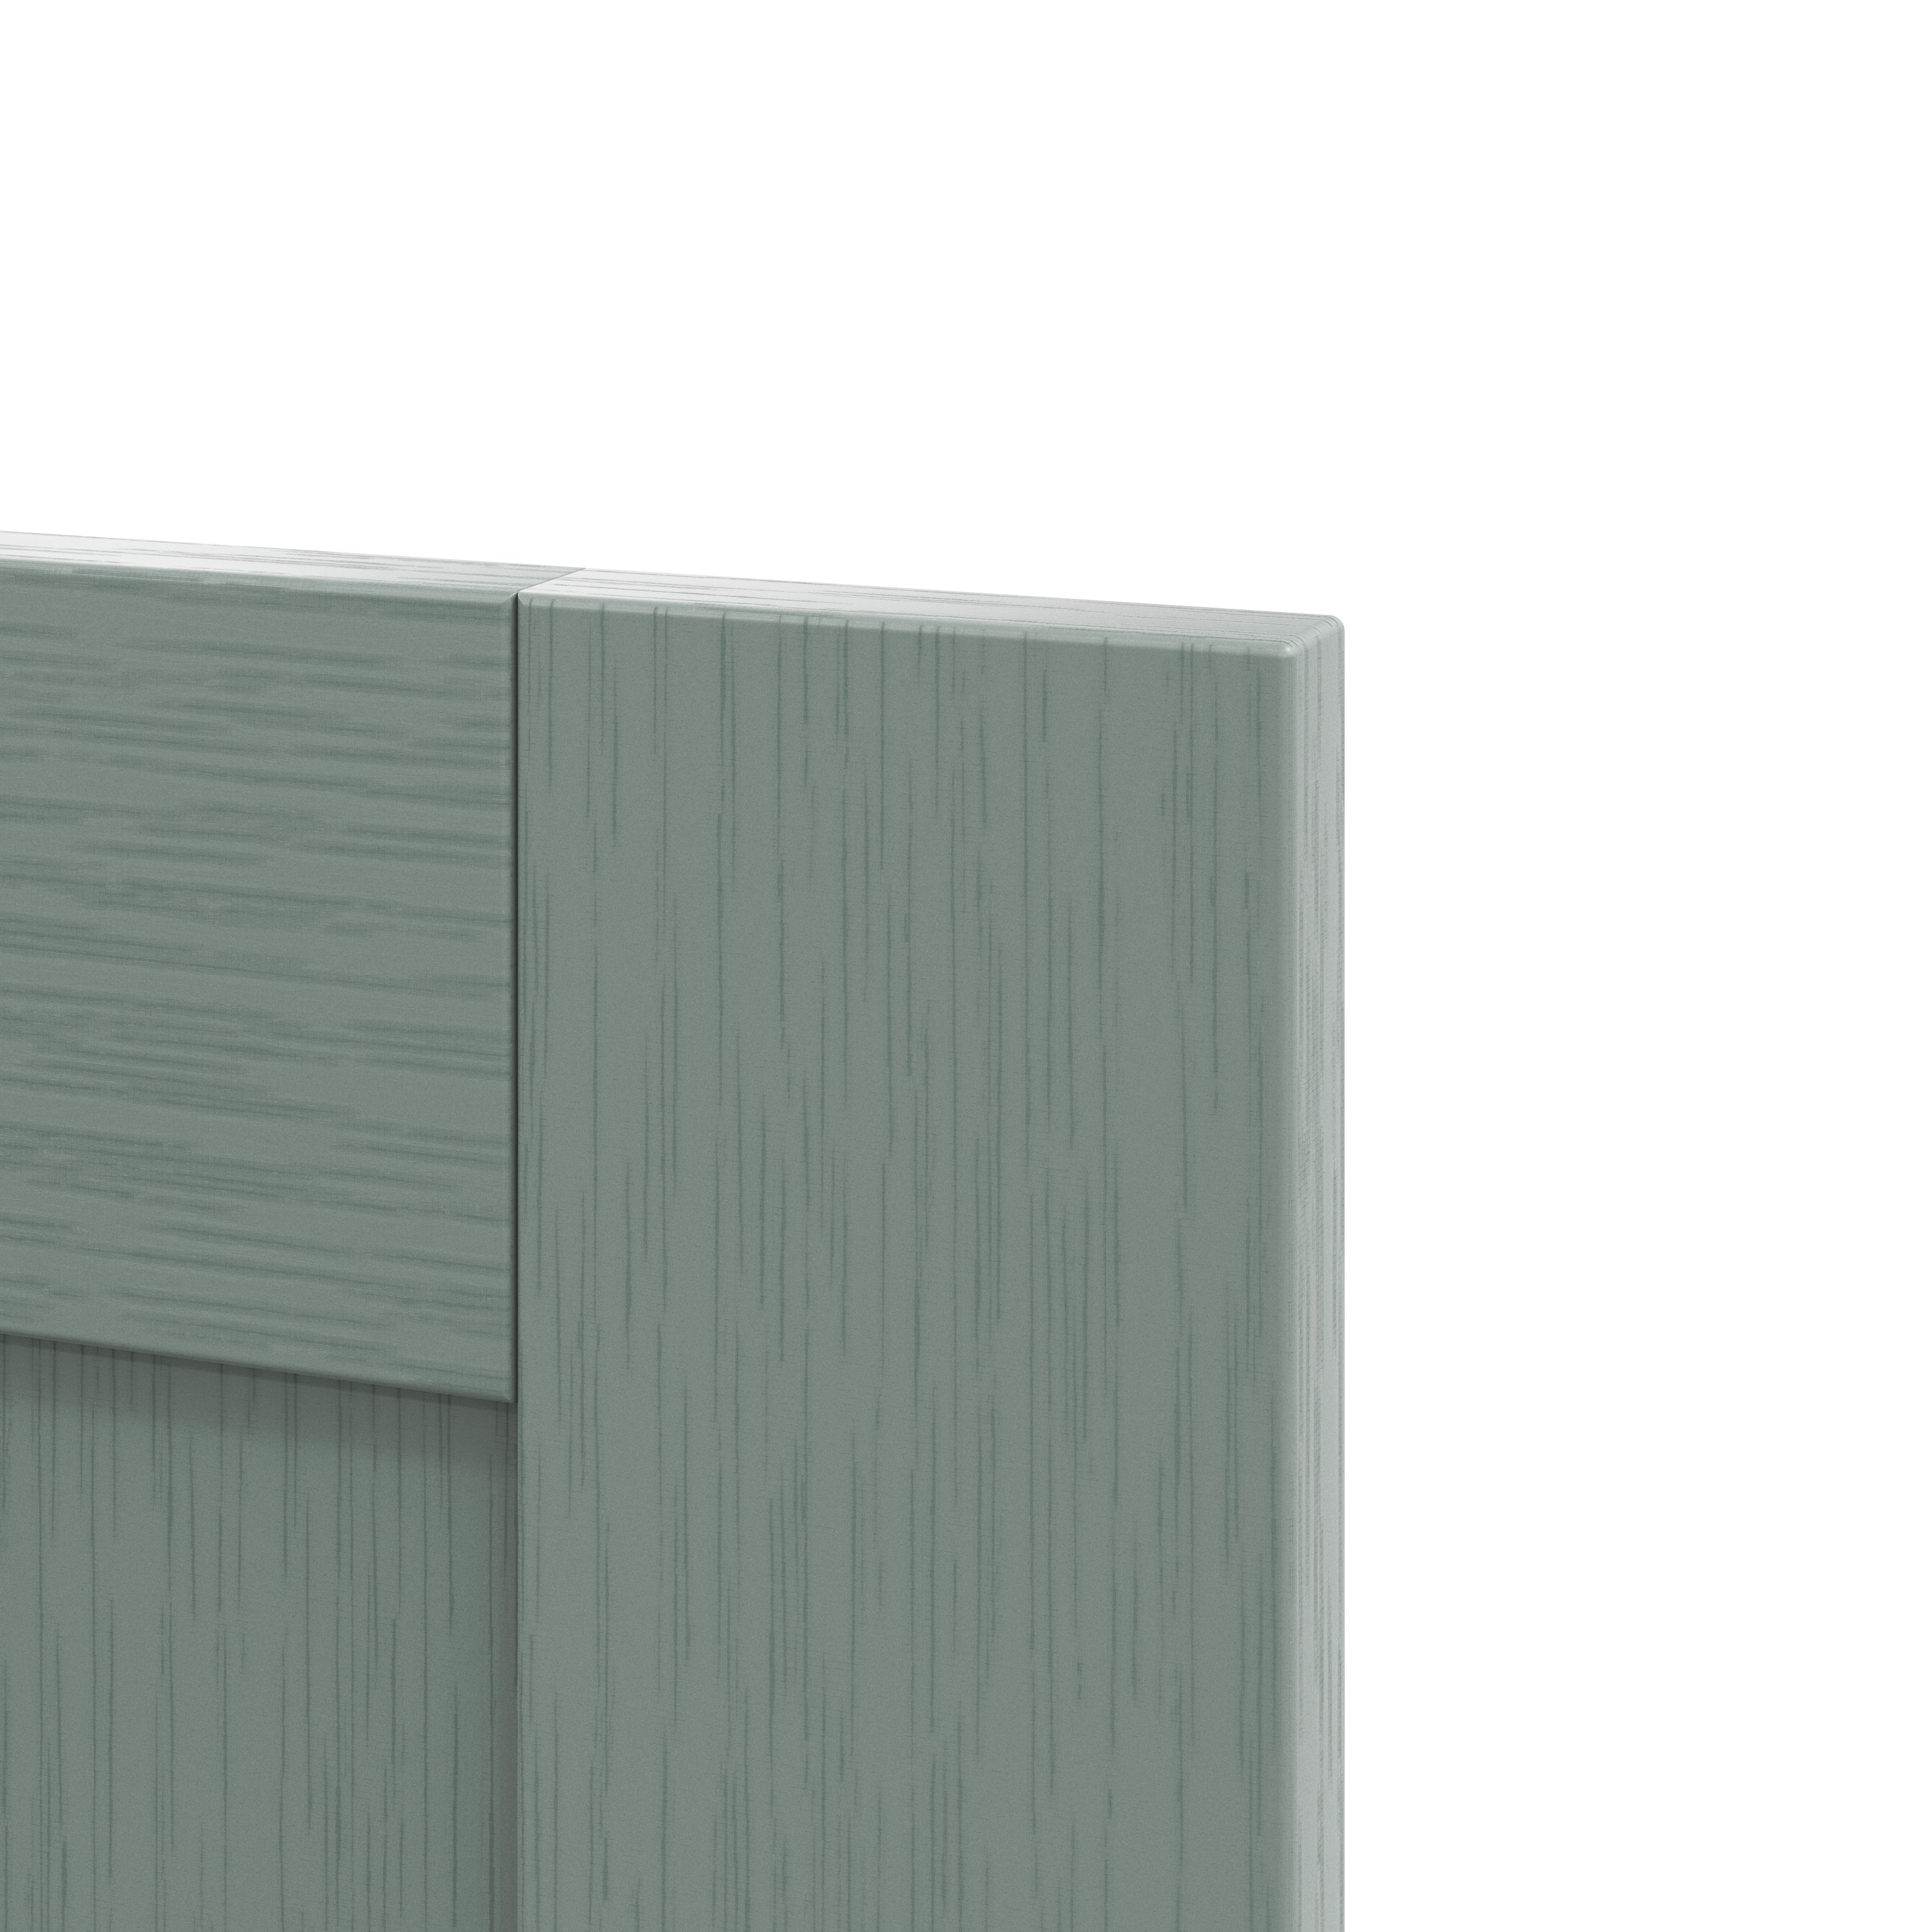 GoodHome Alpinia Matt Green Painted Wood Effect Shaker Highline Cabinet door (W)250mm (H)715mm (T)18mm